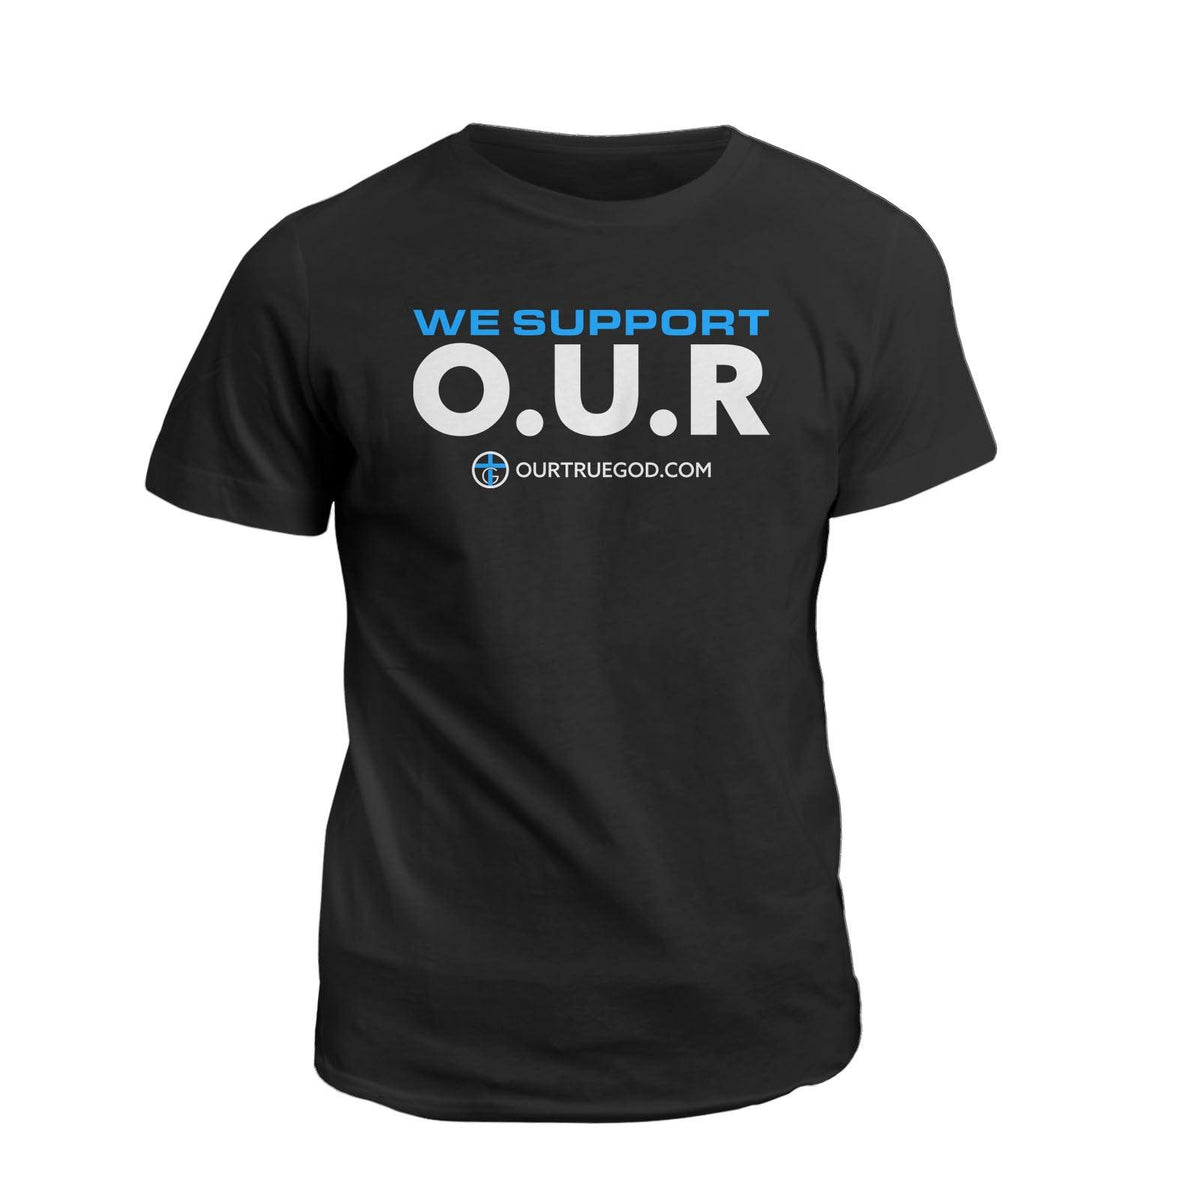 We Support O.U.R